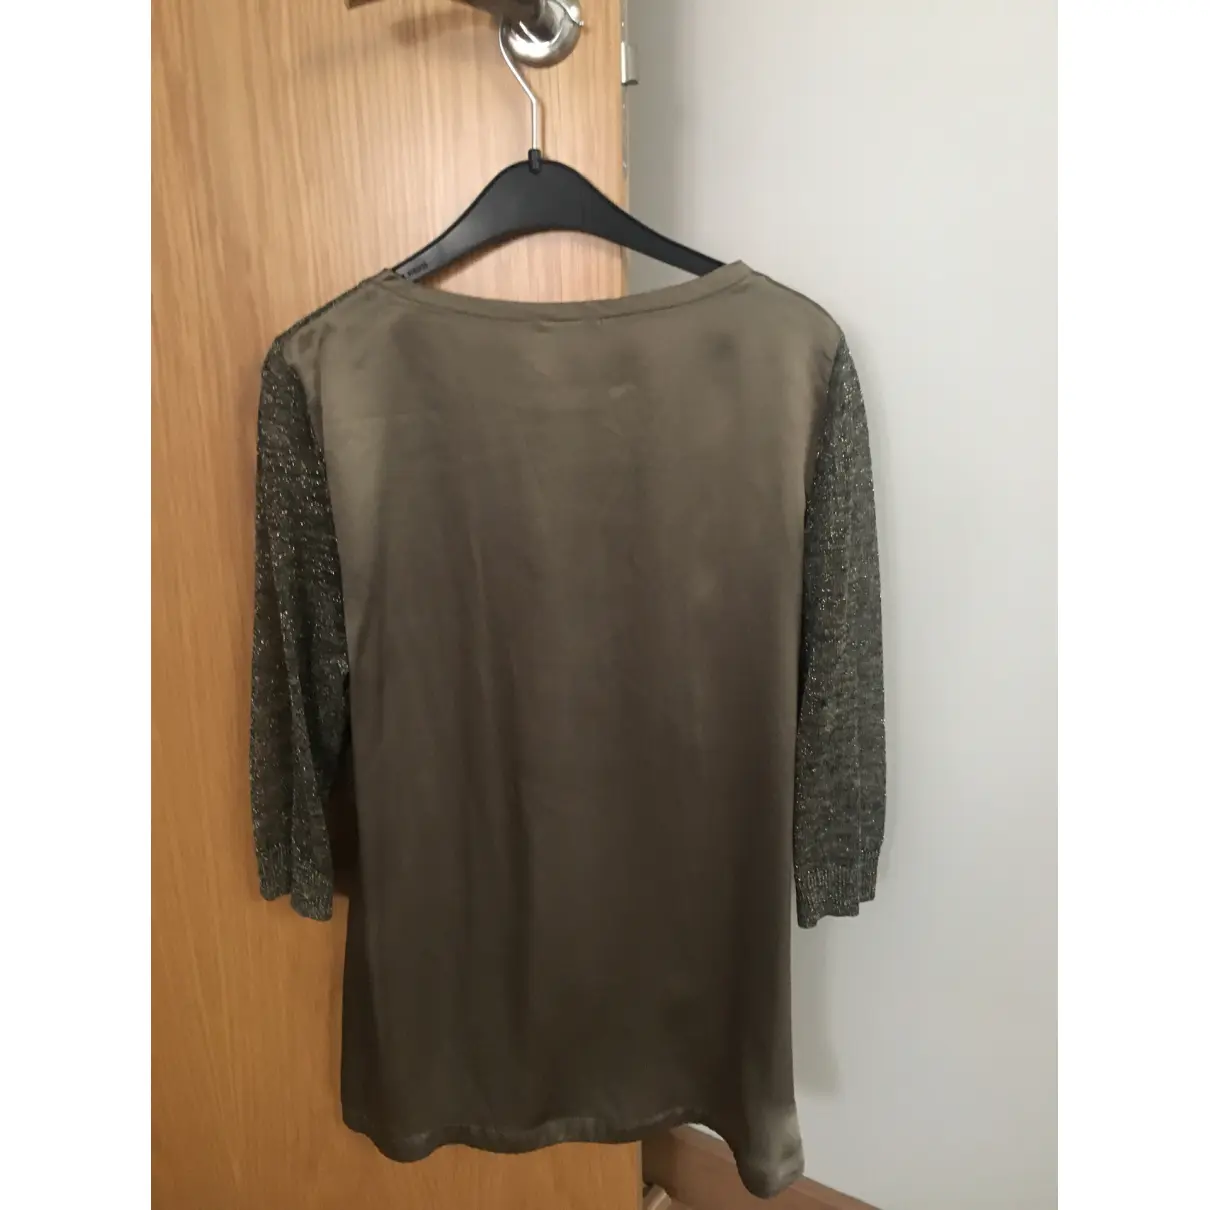 Buy Hoss Intropia Silk blouse online